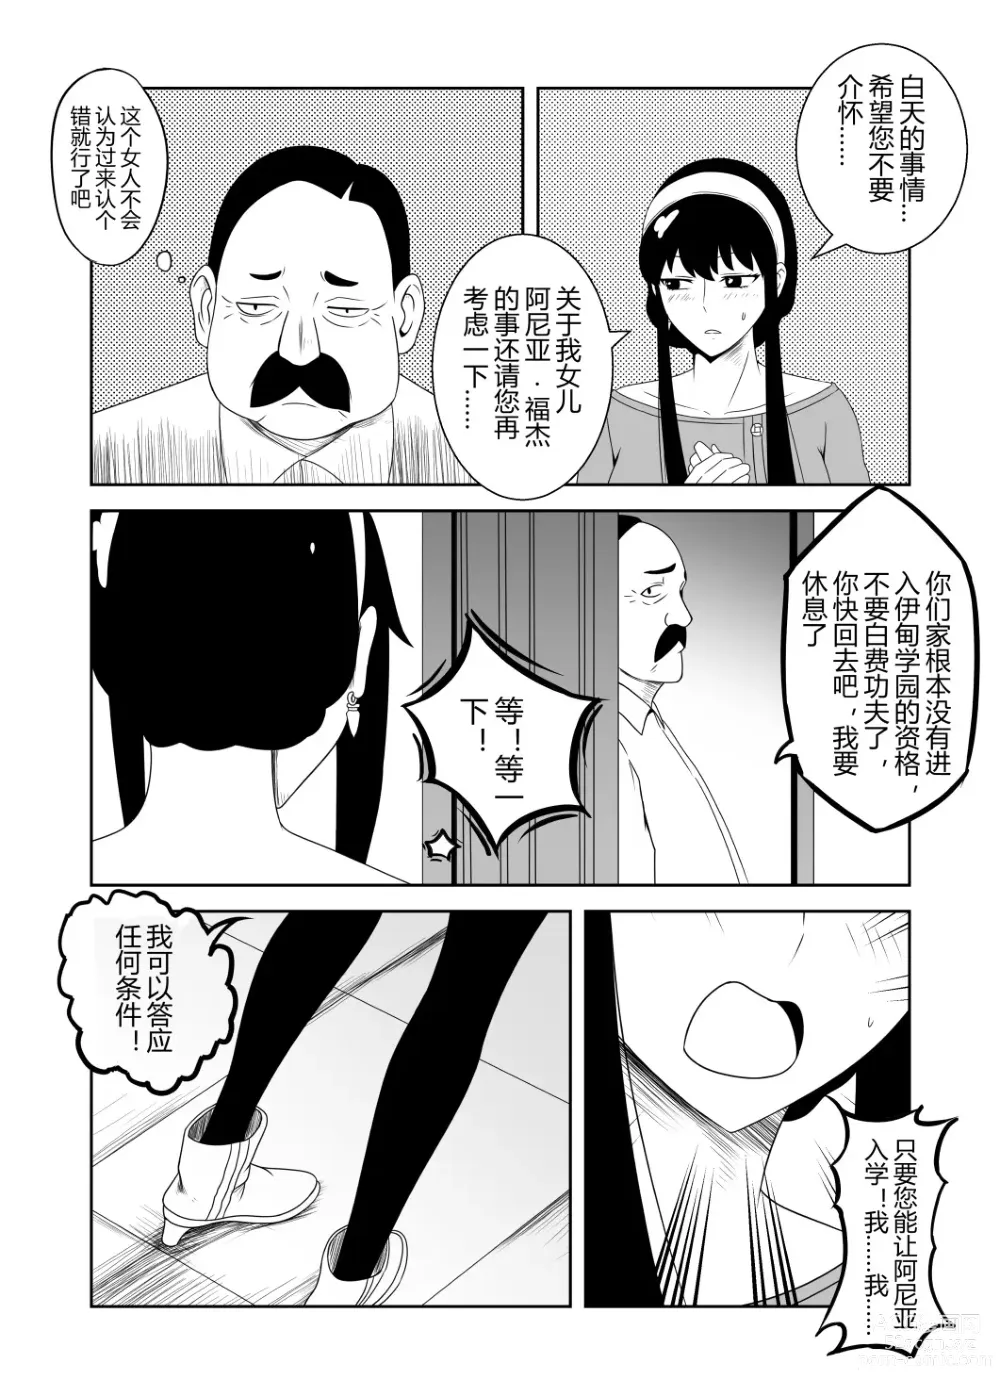 Page 5 of doujinshi 间谍过家家